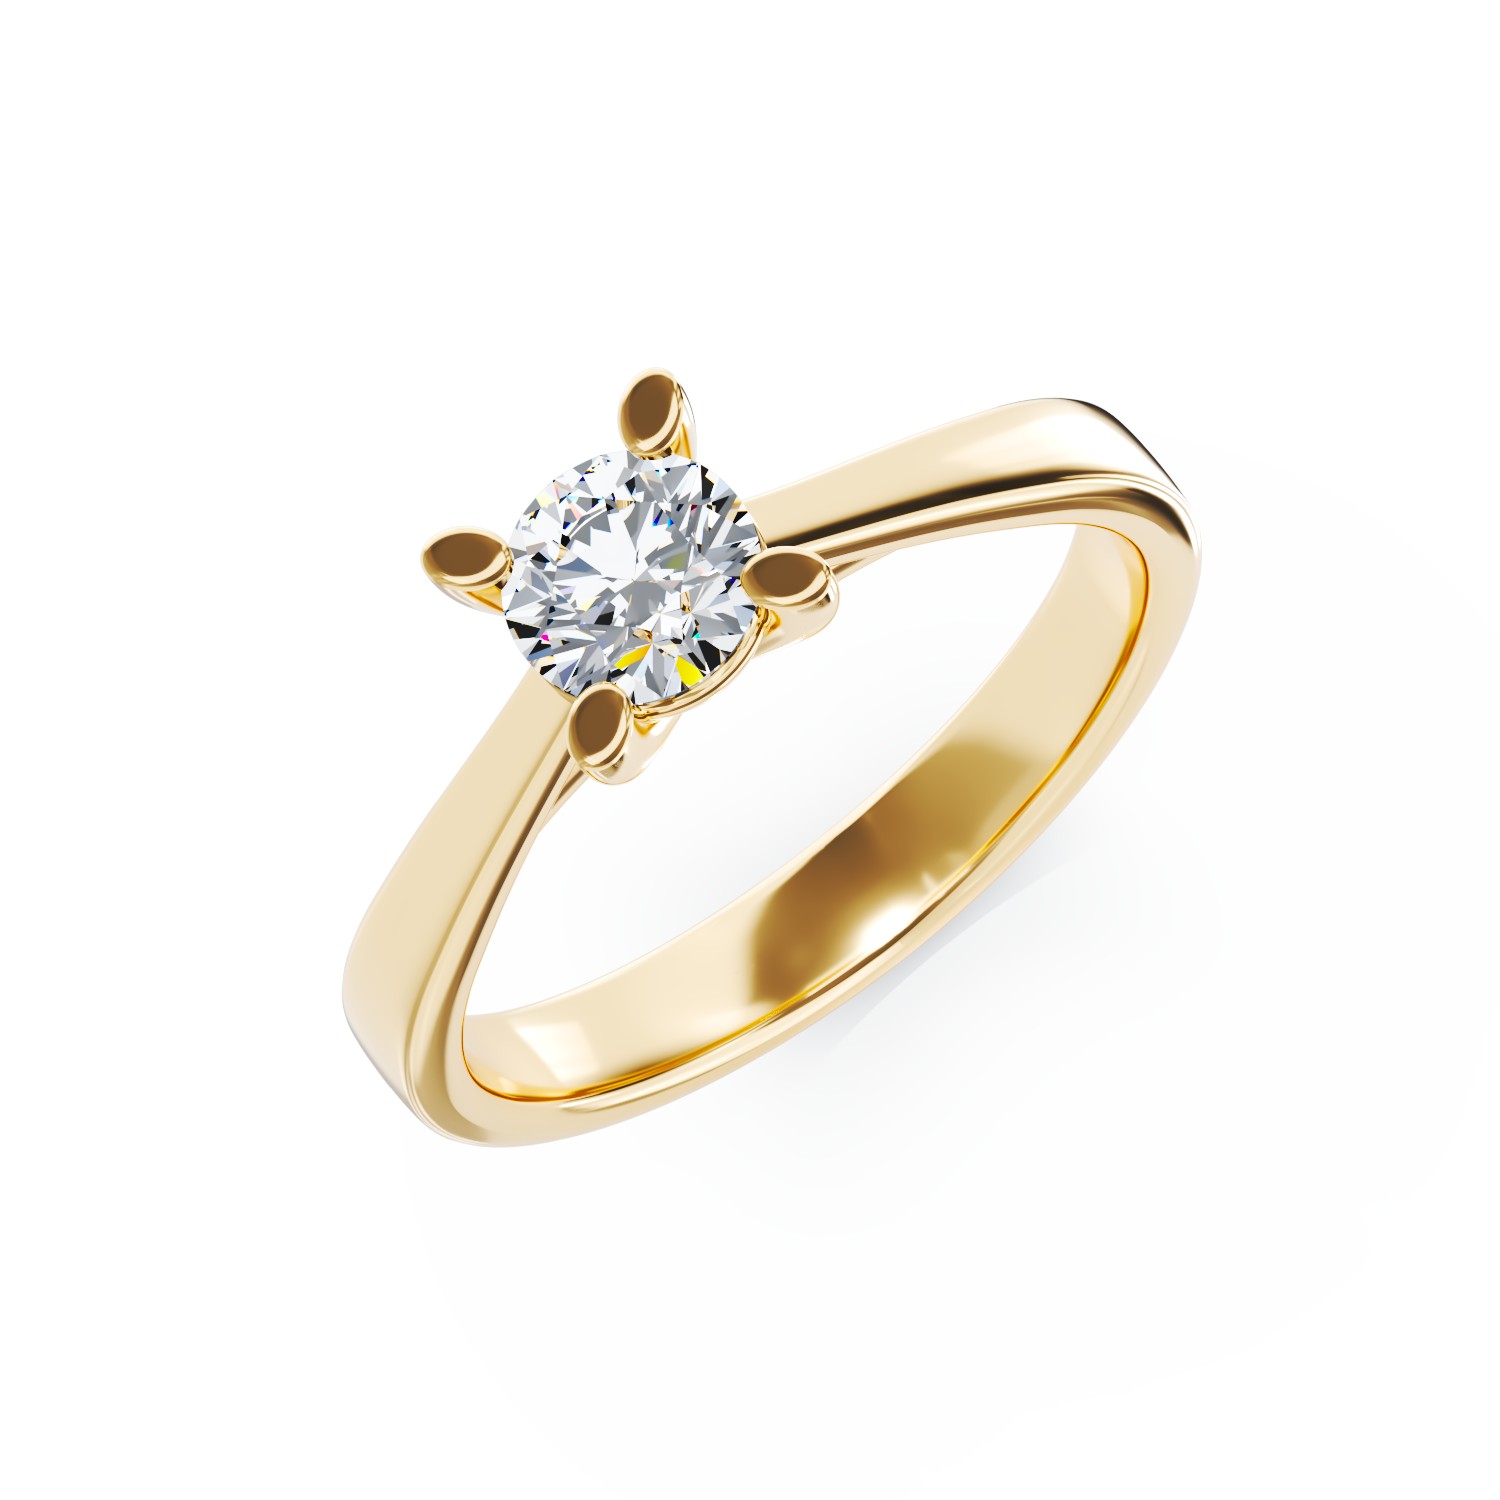 Inel de logodna din aur galben de 18K cu un diamant solitaire de 0.5ct